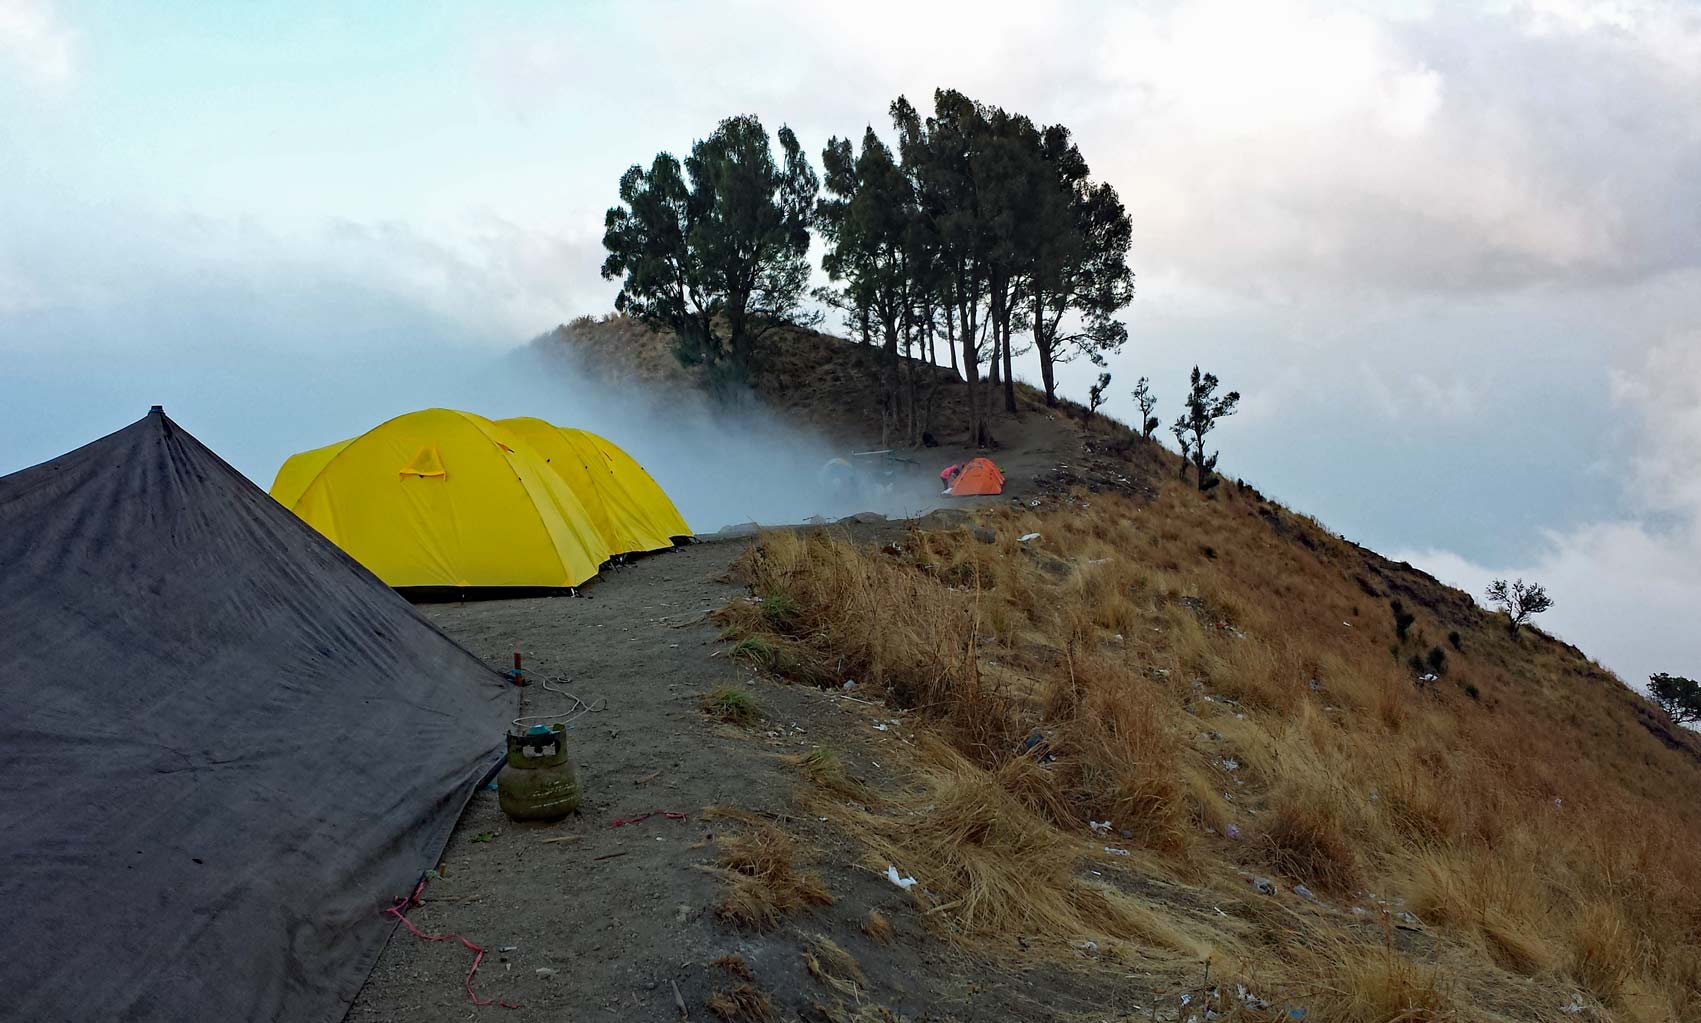 Campsite sembalun crater rim mount rinjani trekking lombok indonesia